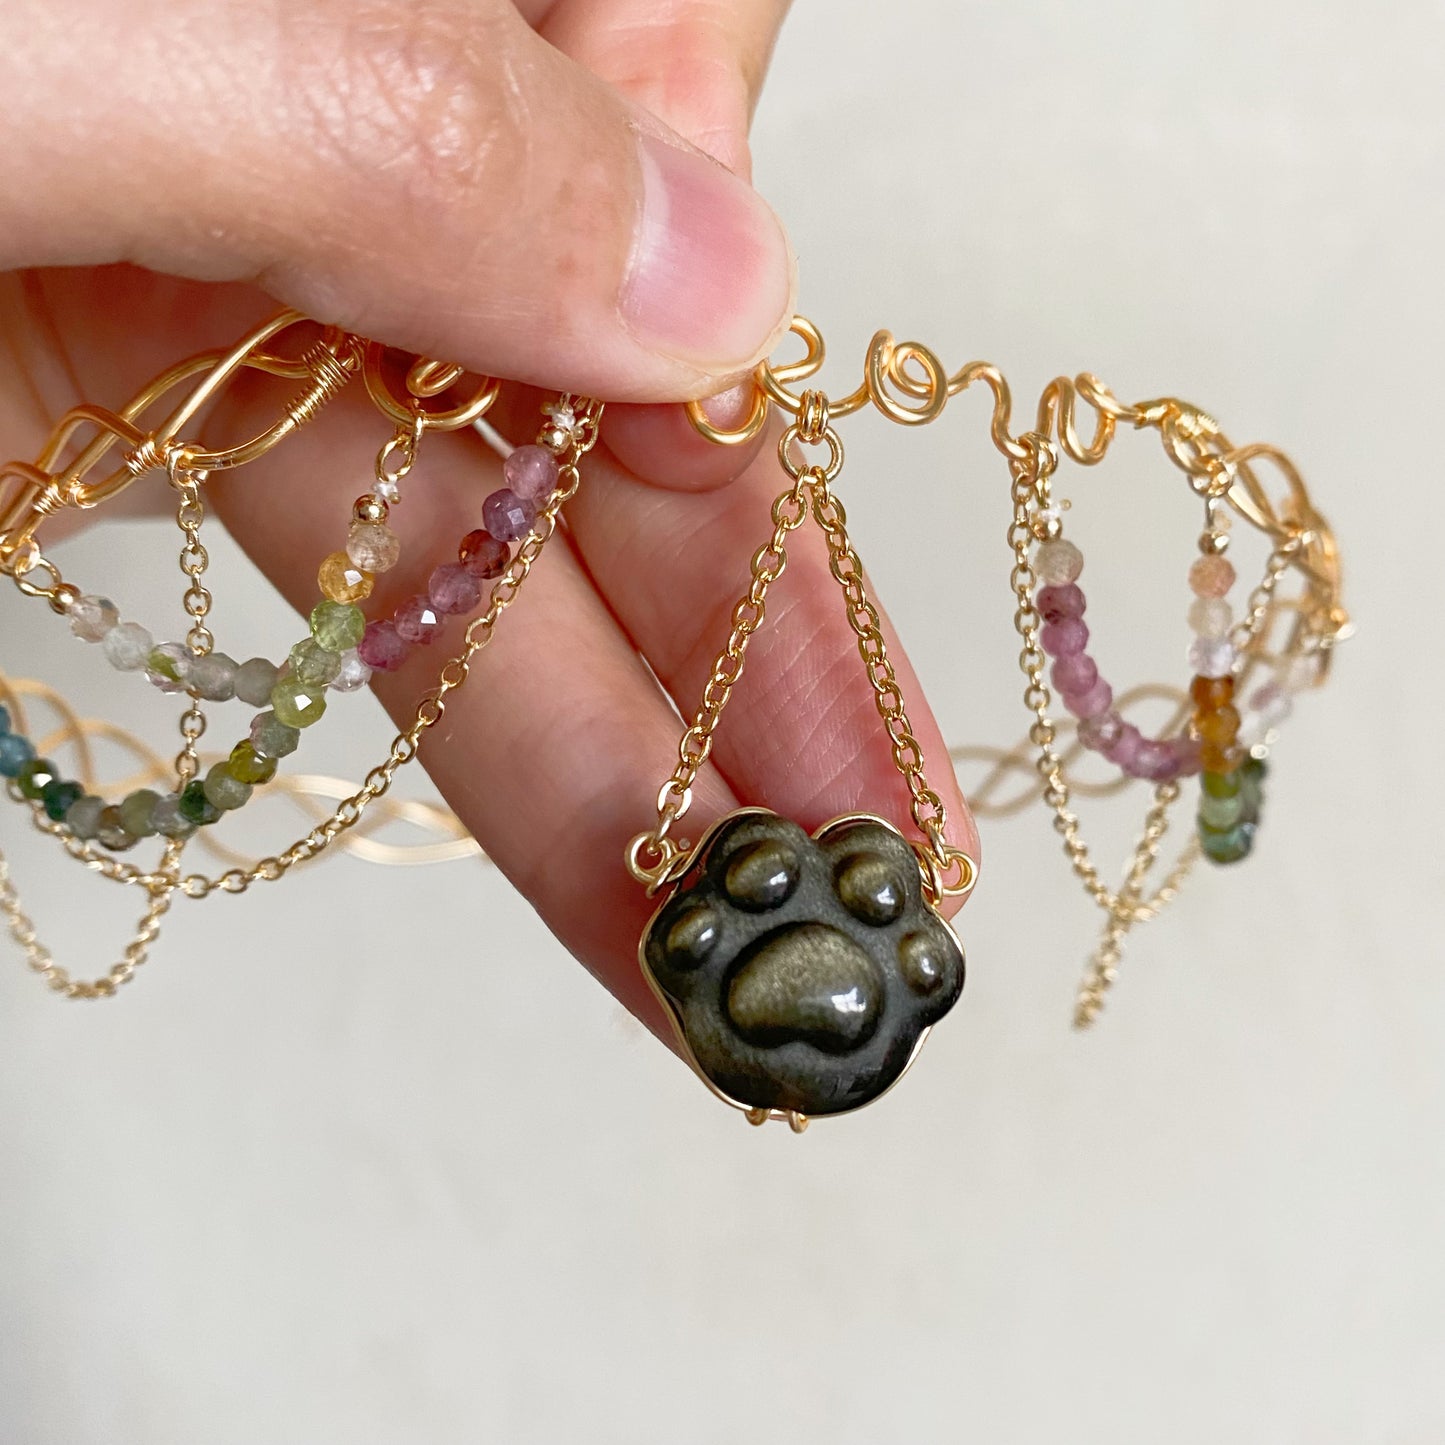 Handmade Meow Choker - Wire Wrapped Jewelry